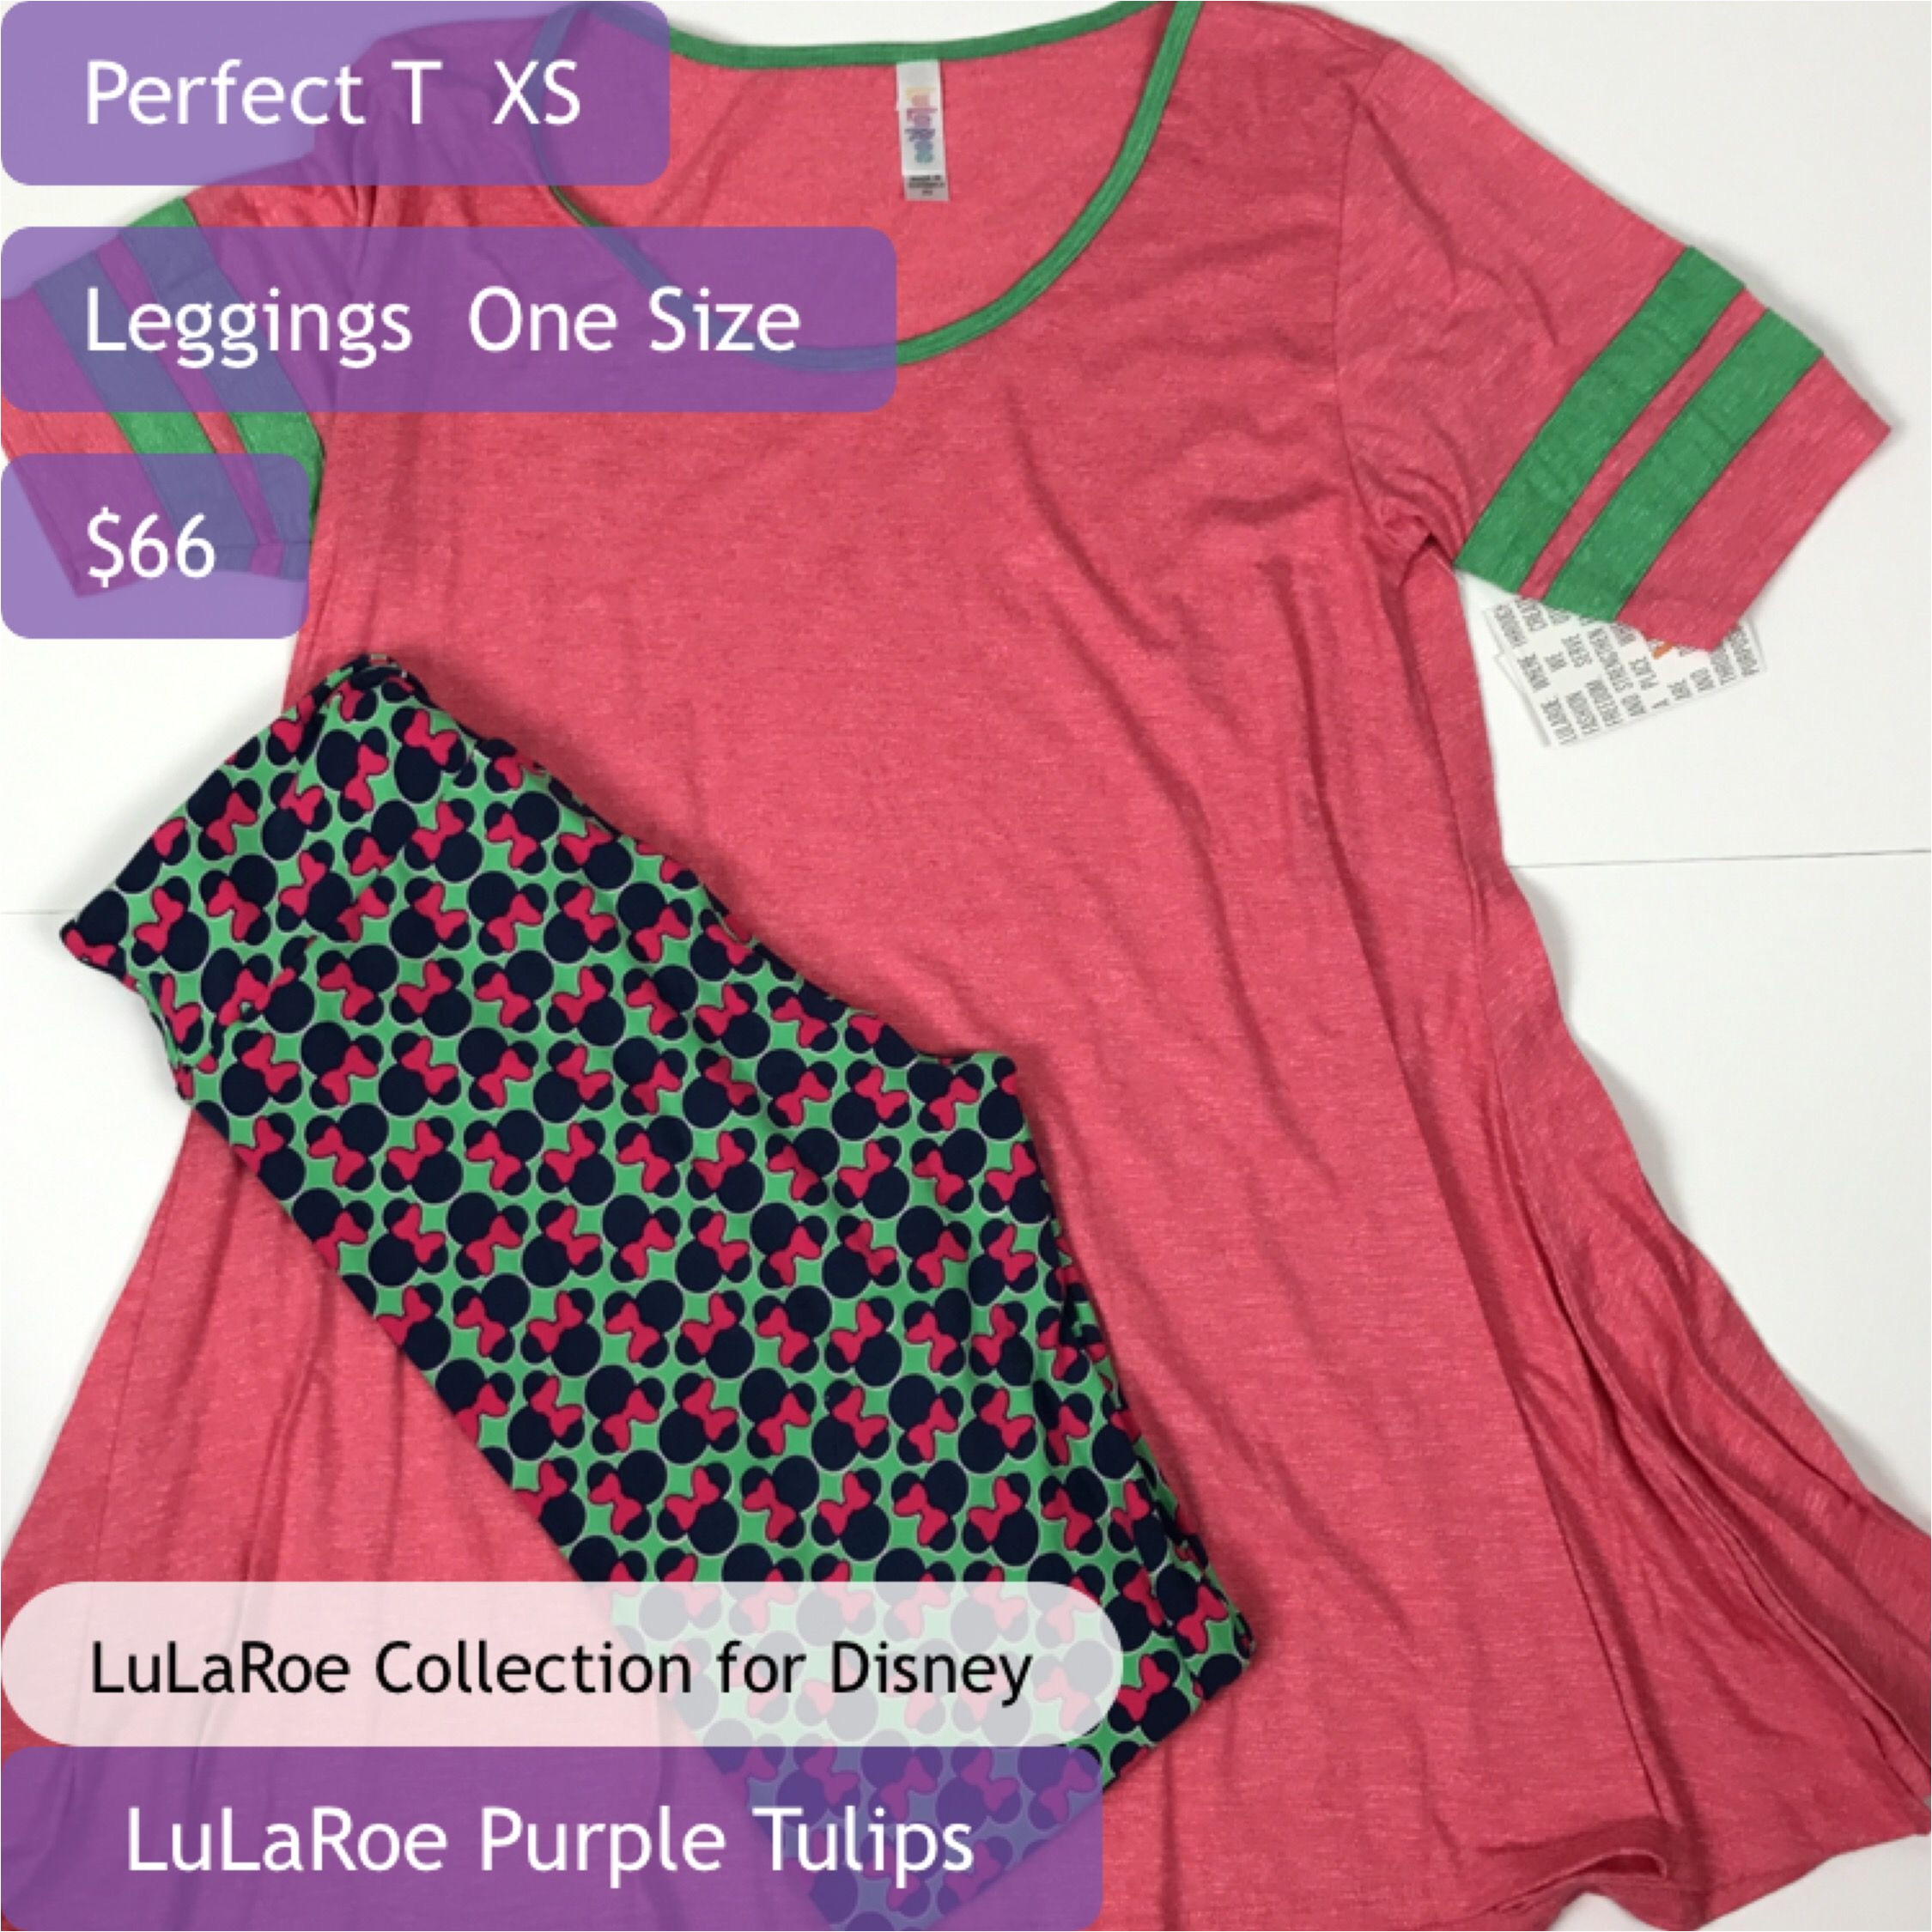 Lularoe Perfect T Price Disney Facebook Com Groups Purpletulips Lularoe Collection for Disney